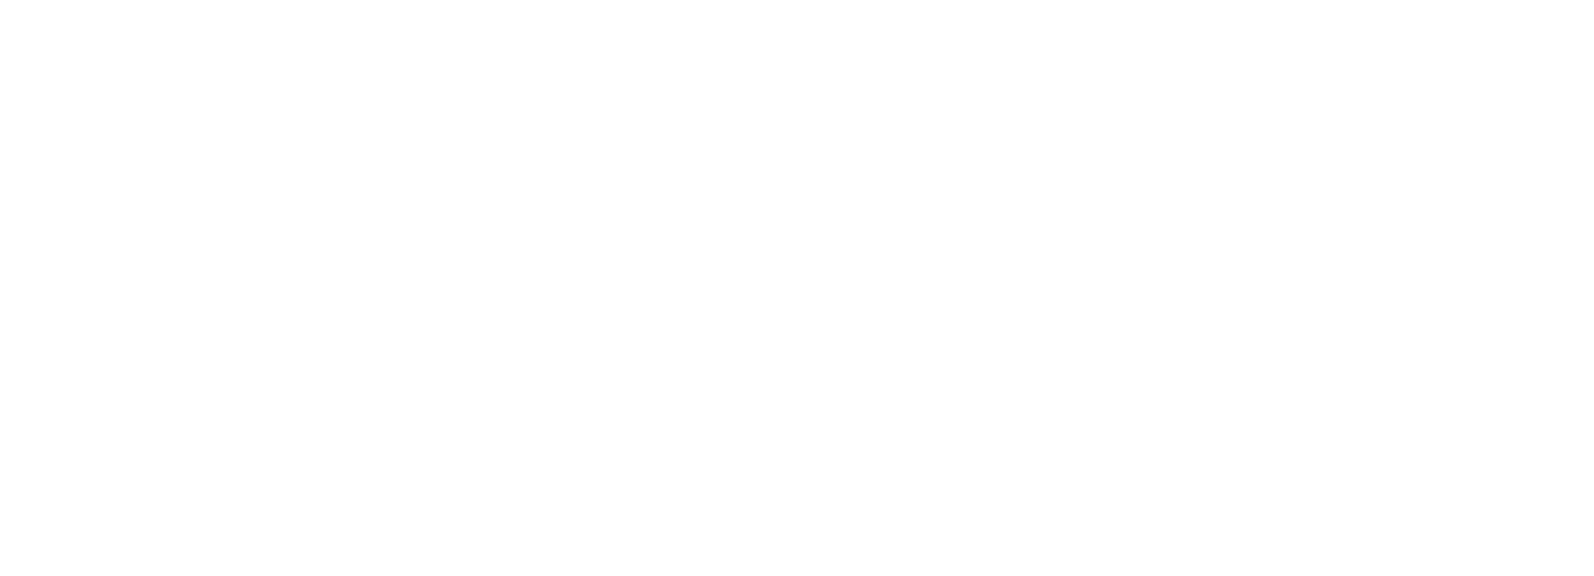 VTEX Logo groß für dunkle Hintergründe (transparentes PNG)